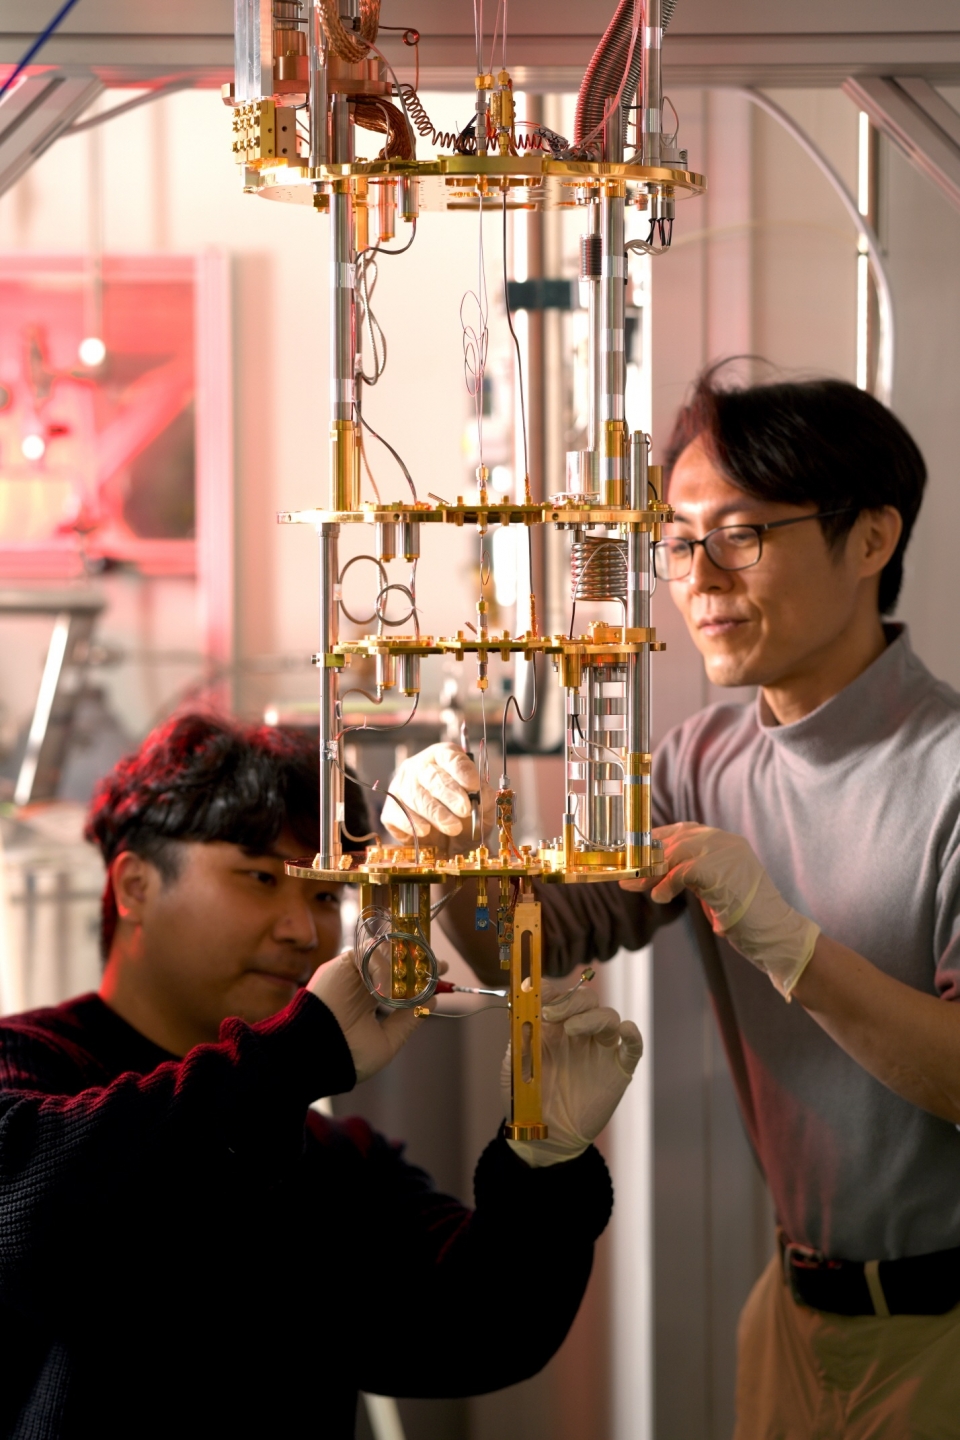 KRISS 양자기술연구소 차진웅 선임연구원(왼쪽), 서준호 책임연구원이 니오븀 나노전기역학 소자 측정 시스템을 준비하고 있다.